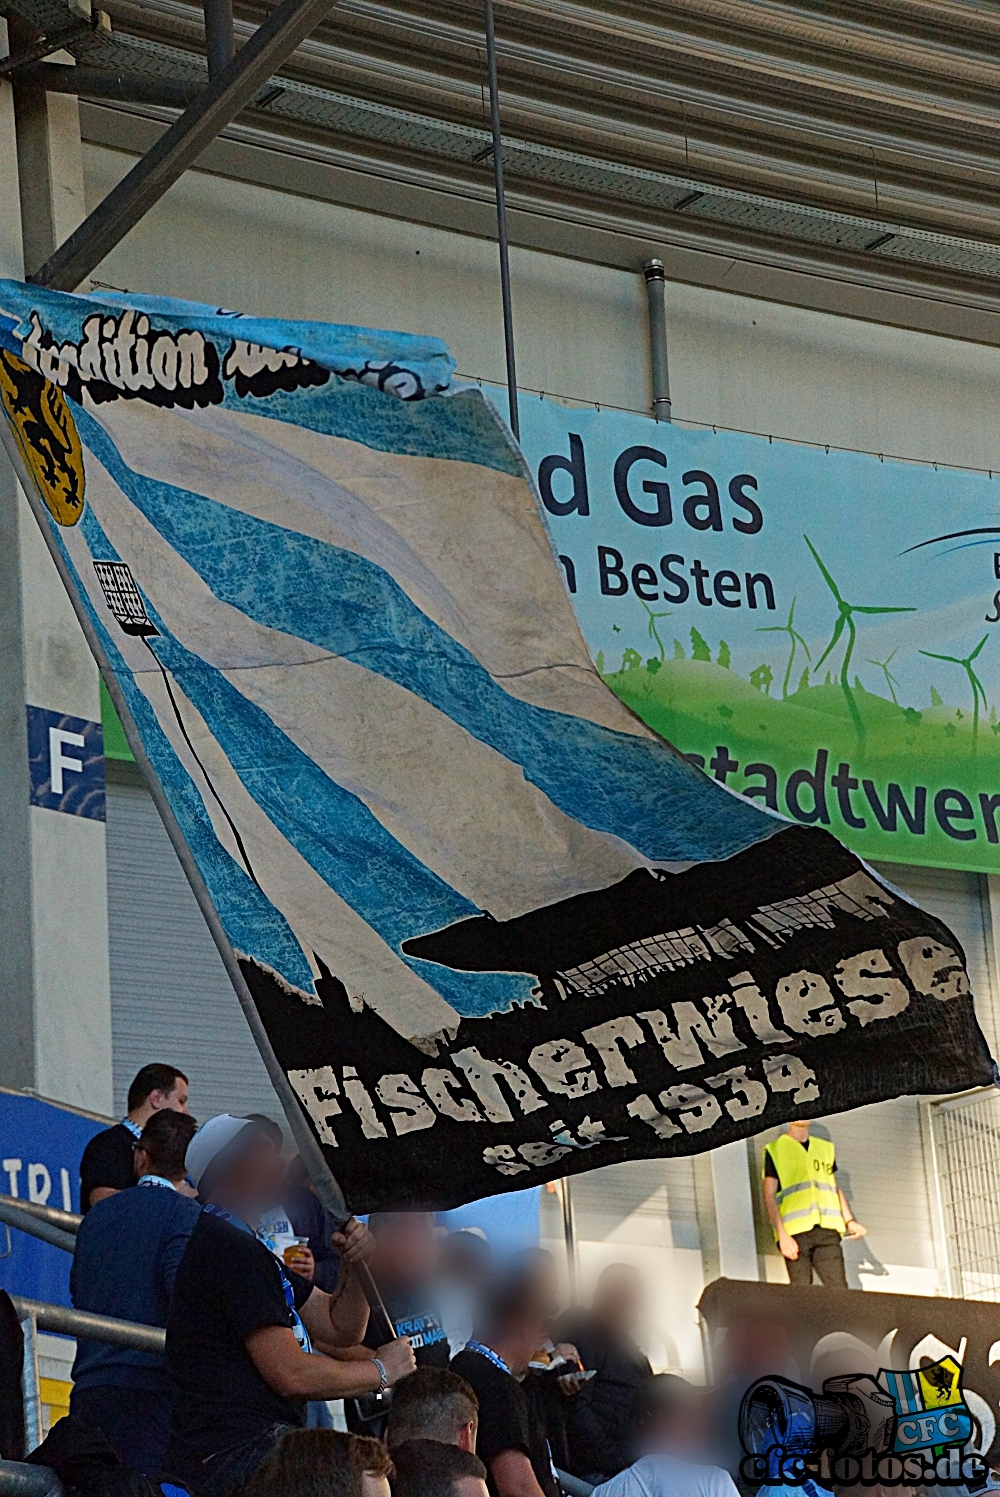 SC Paderborn - Chemnitzer FC 4:2 (0:1)